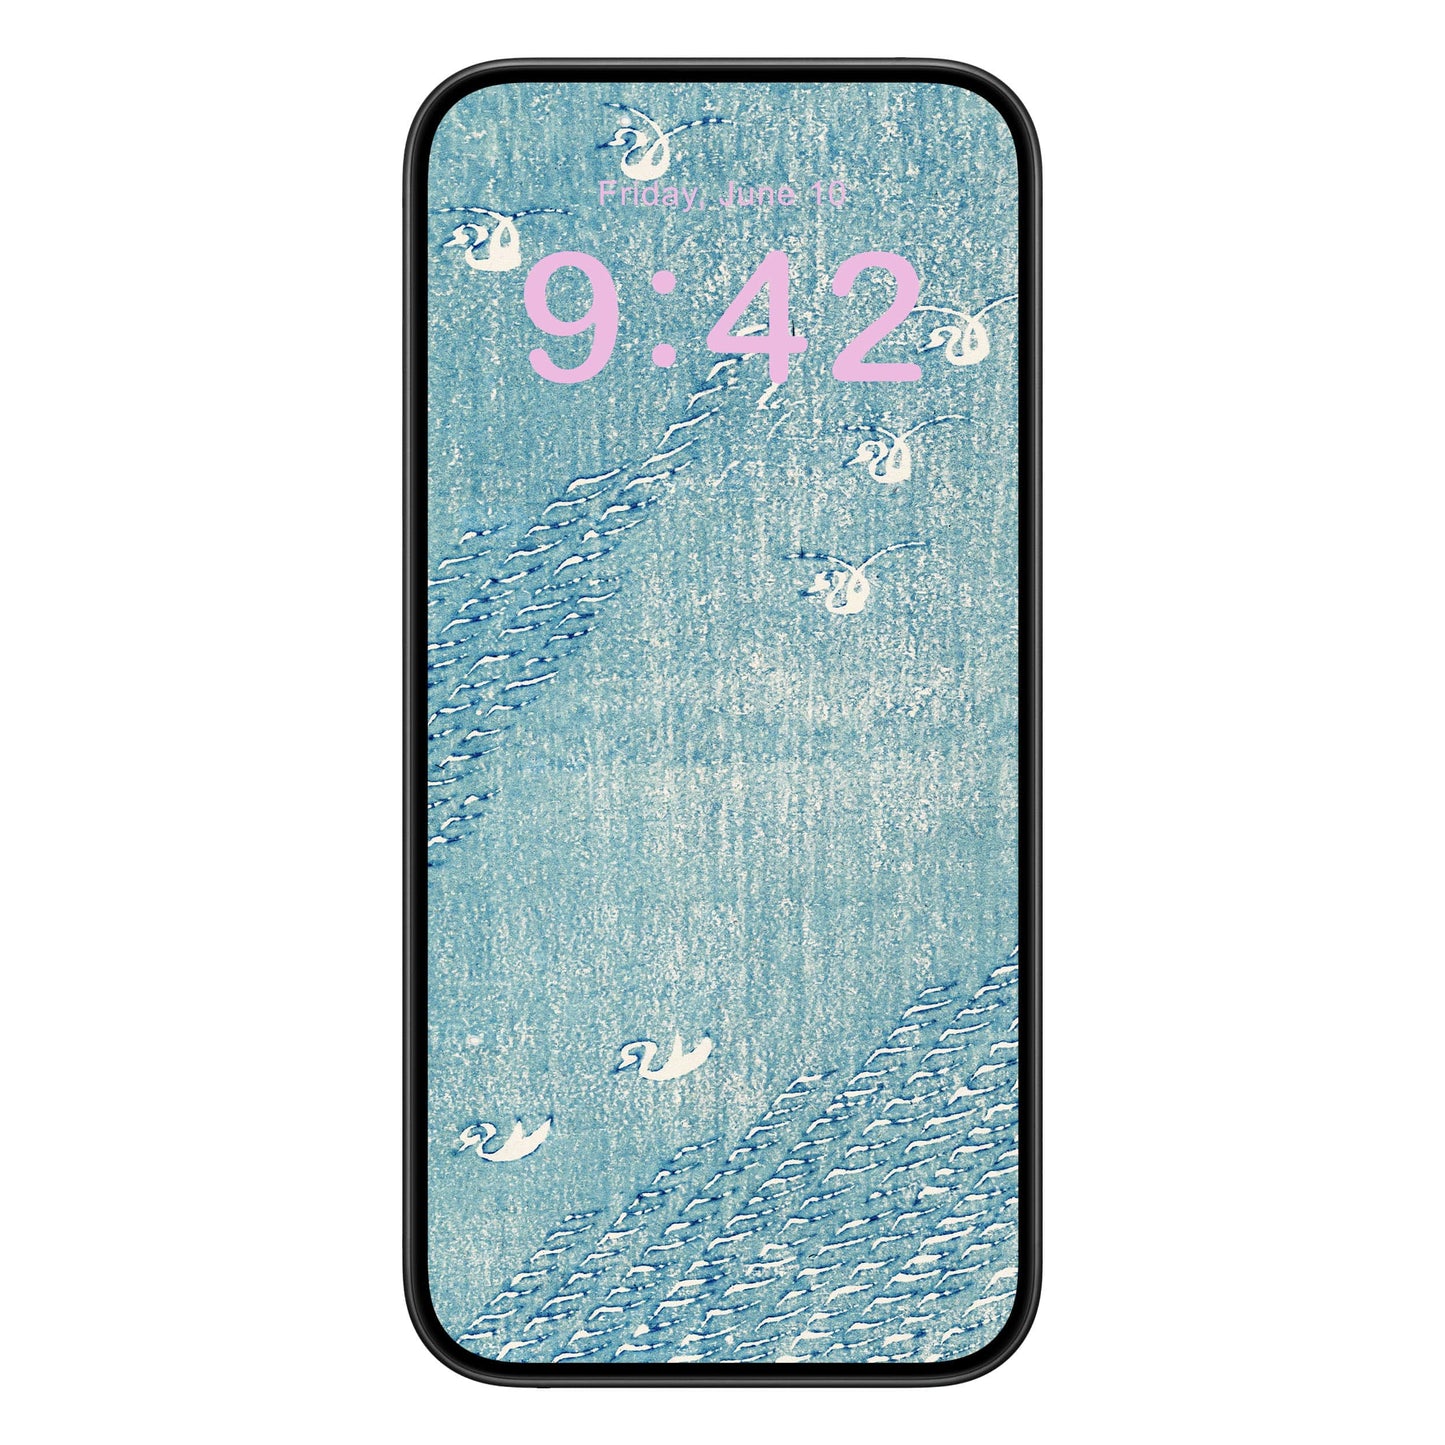 Light Blue Minimalist Phone Wallpaper Pink Text